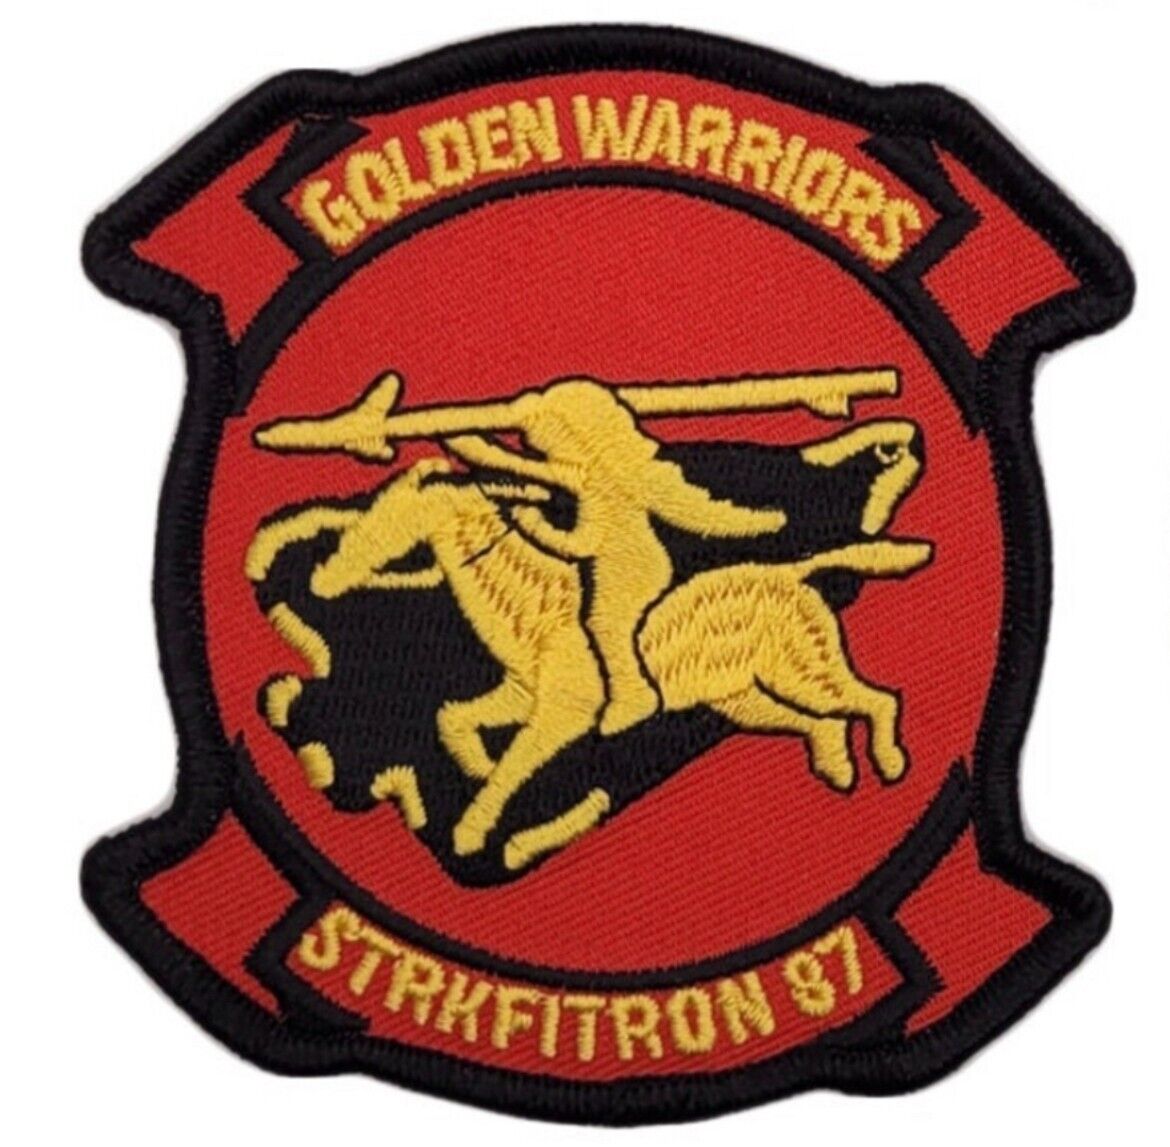 Top Gun Golden Warriors Patch (3.5 Inch) Velcro Badges Rooster US Navy Fighters Weapon School Flight Suit Costume Patches